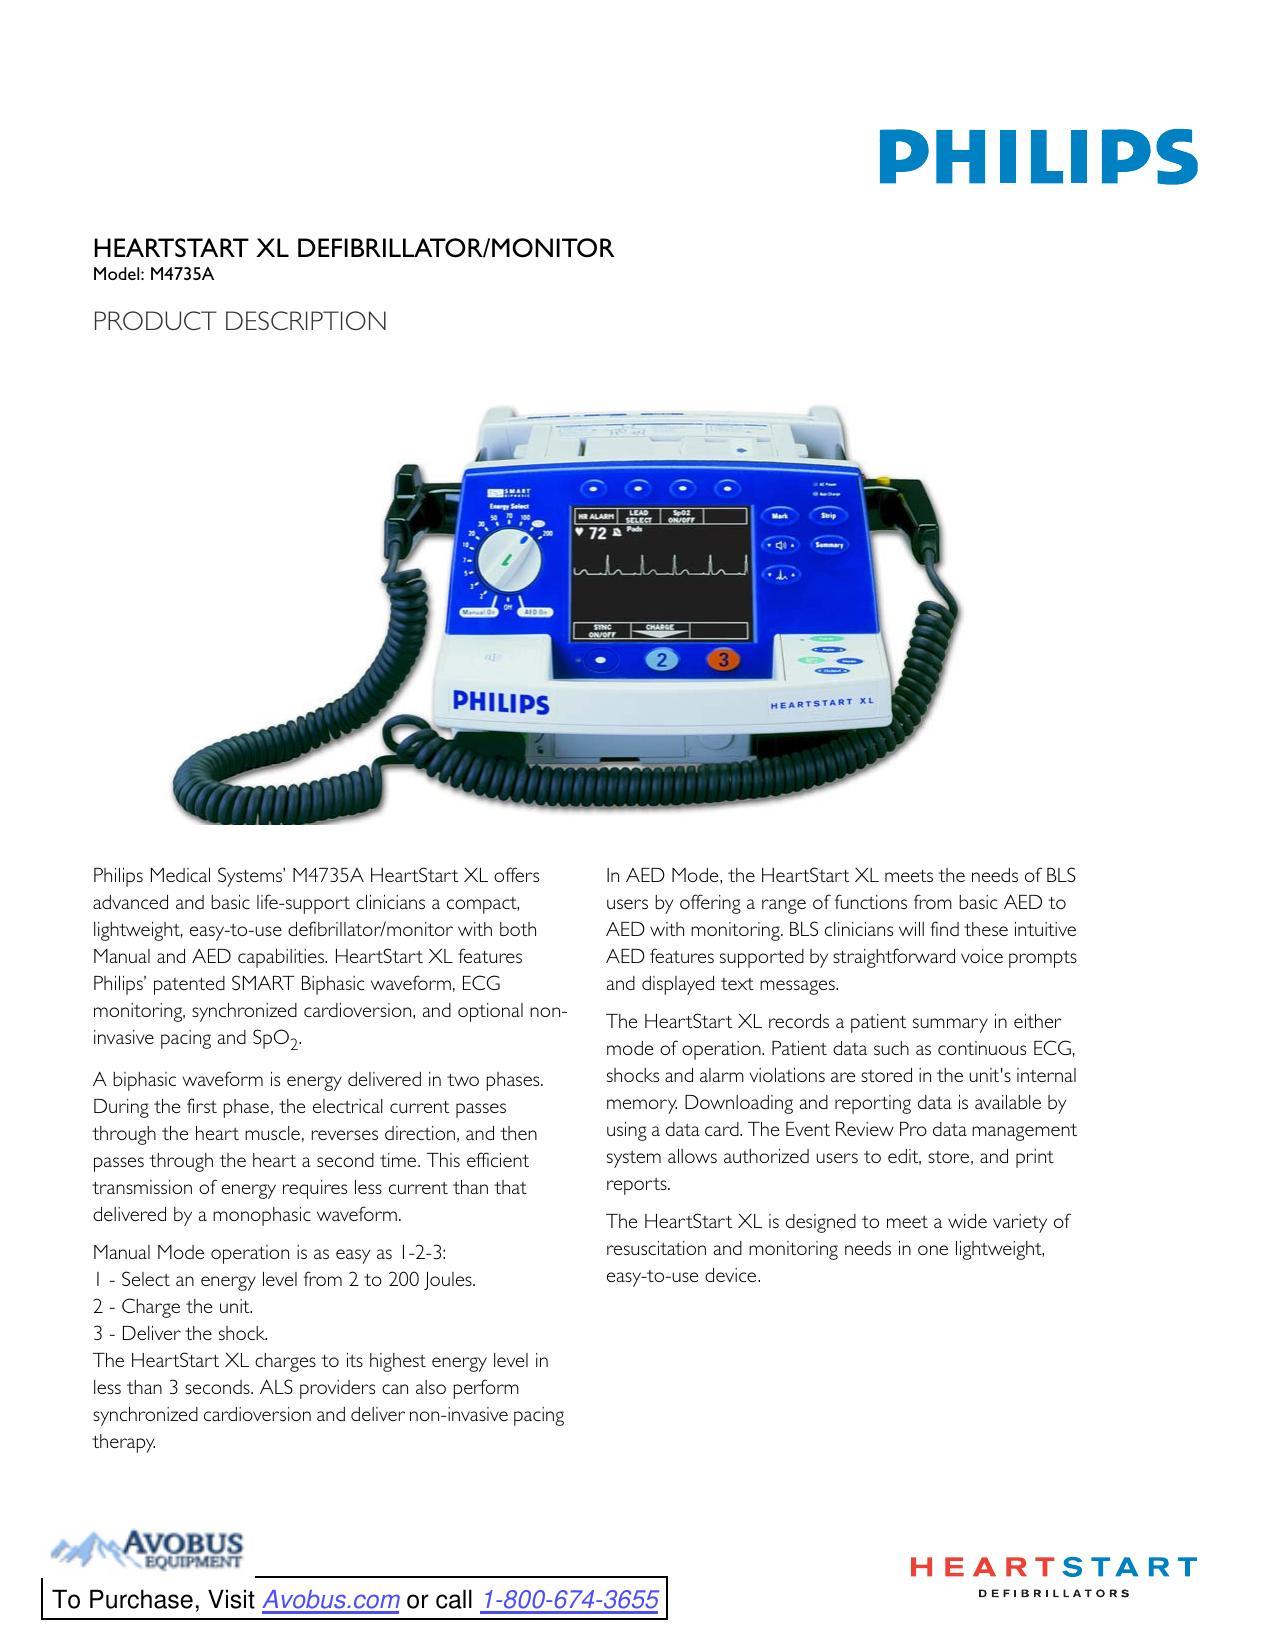 philips-heartstart-xl-defibrillatormonitor-model-m4735a-user-manual.pdf